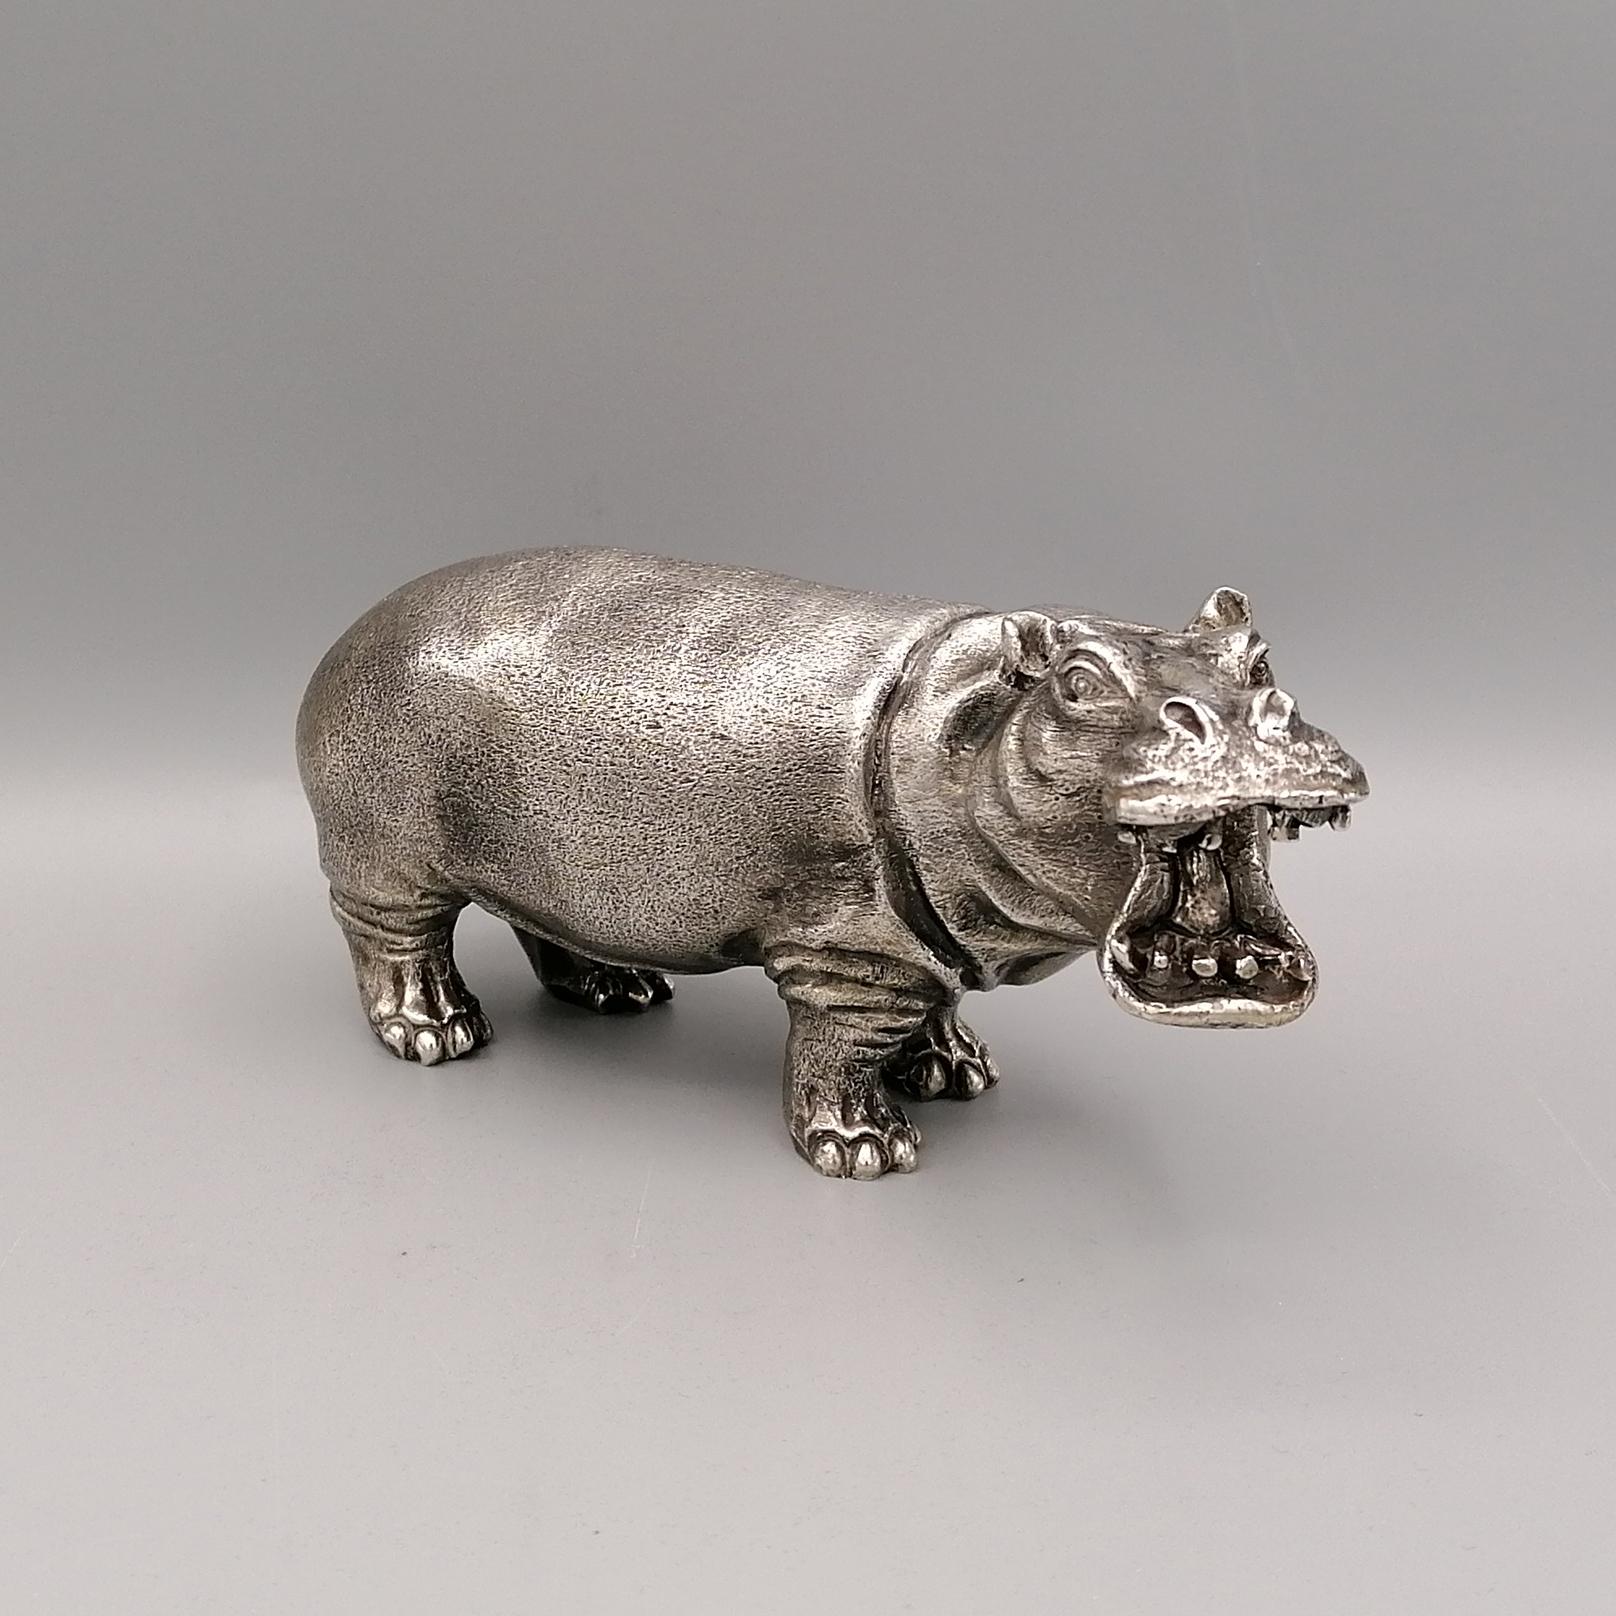 Other 20th Century Italian Solid Silver Sculpture Depicting Hippopotamus